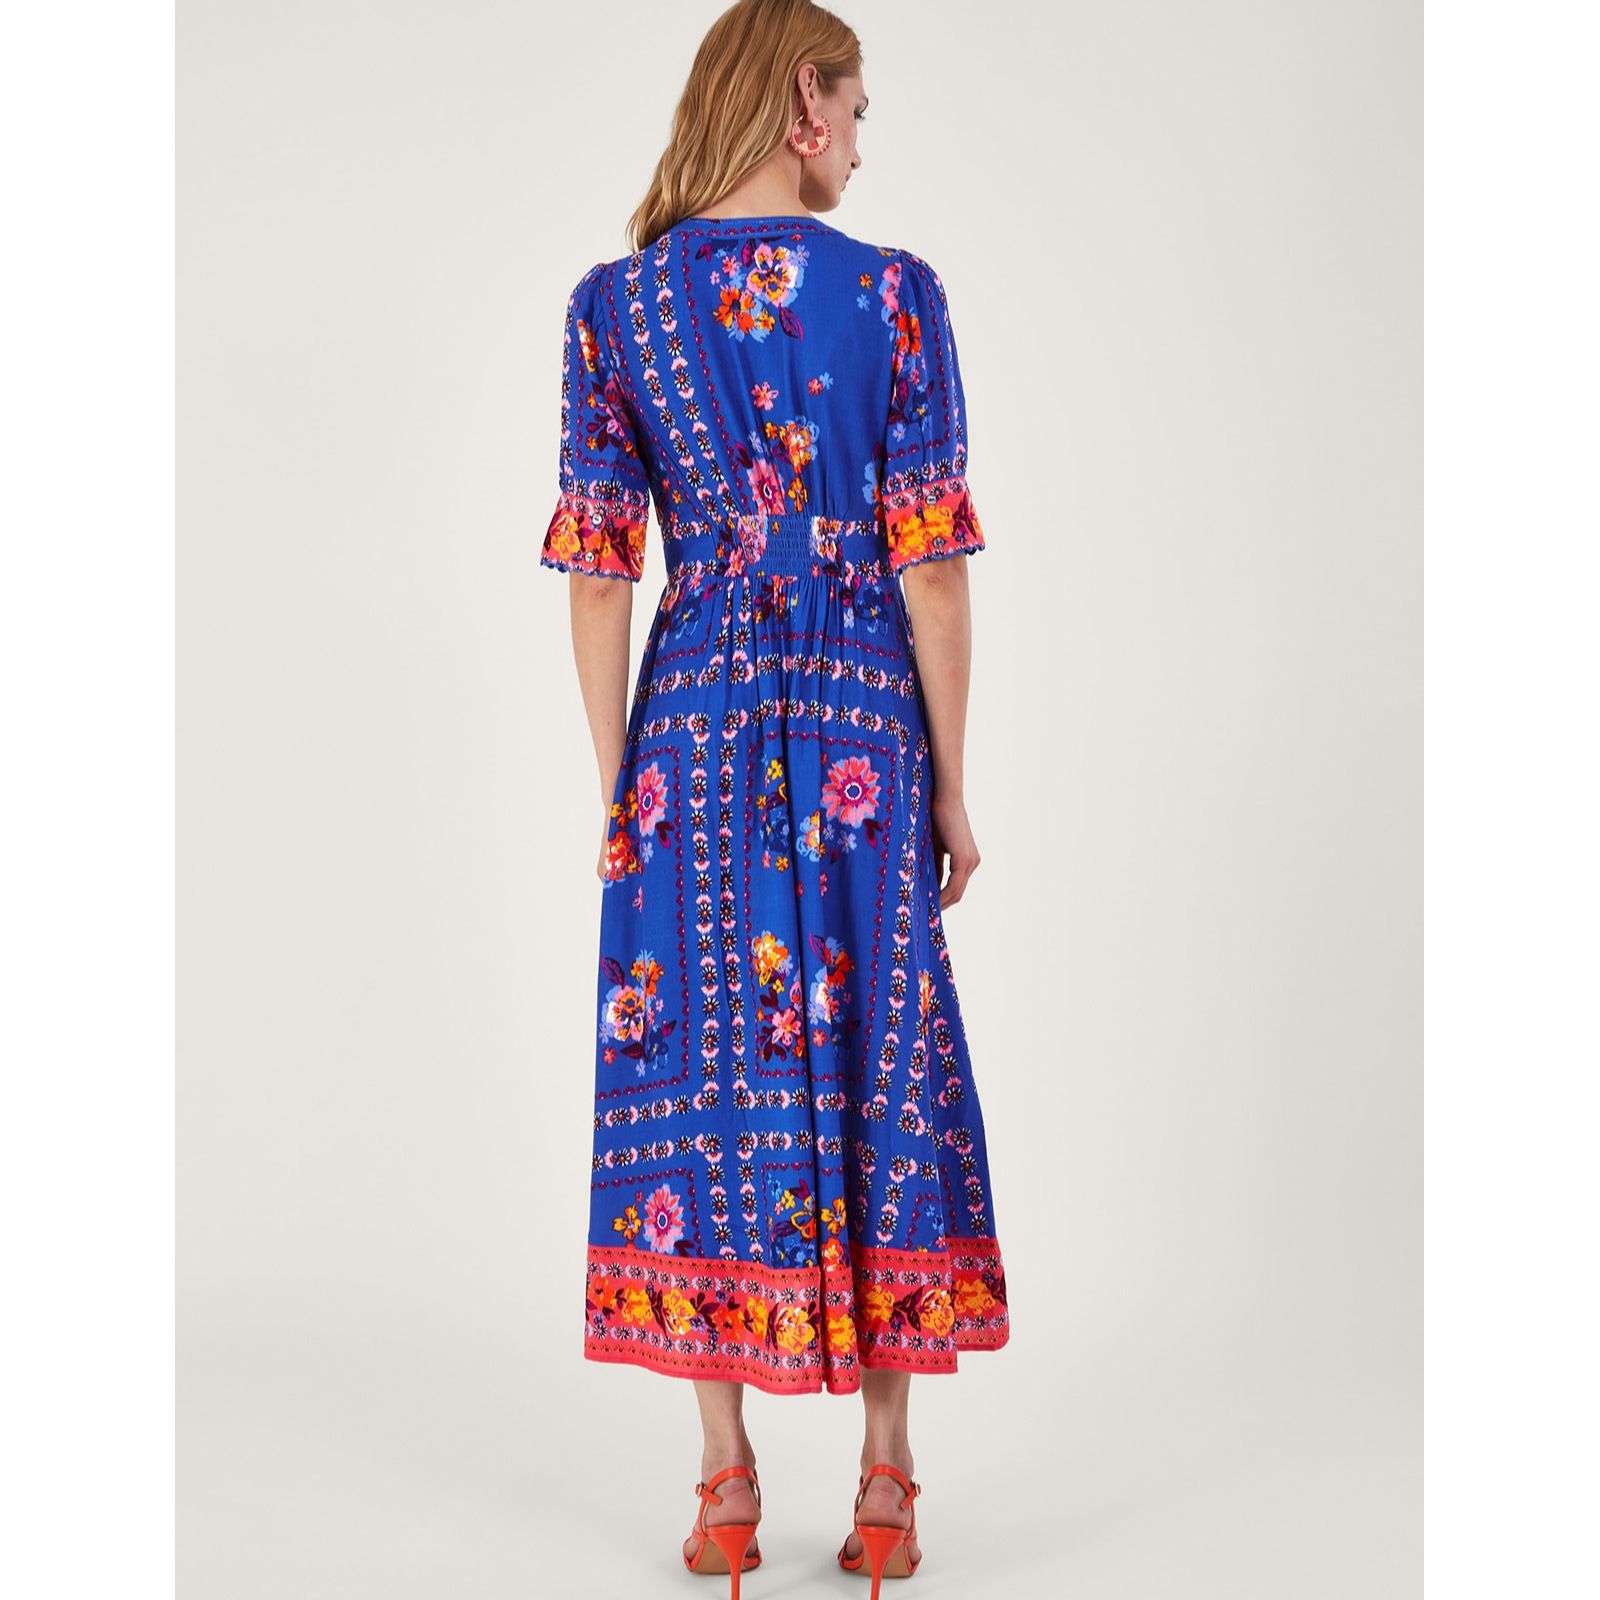 Monsoon Mixed Floral Print Dress - QVC UK